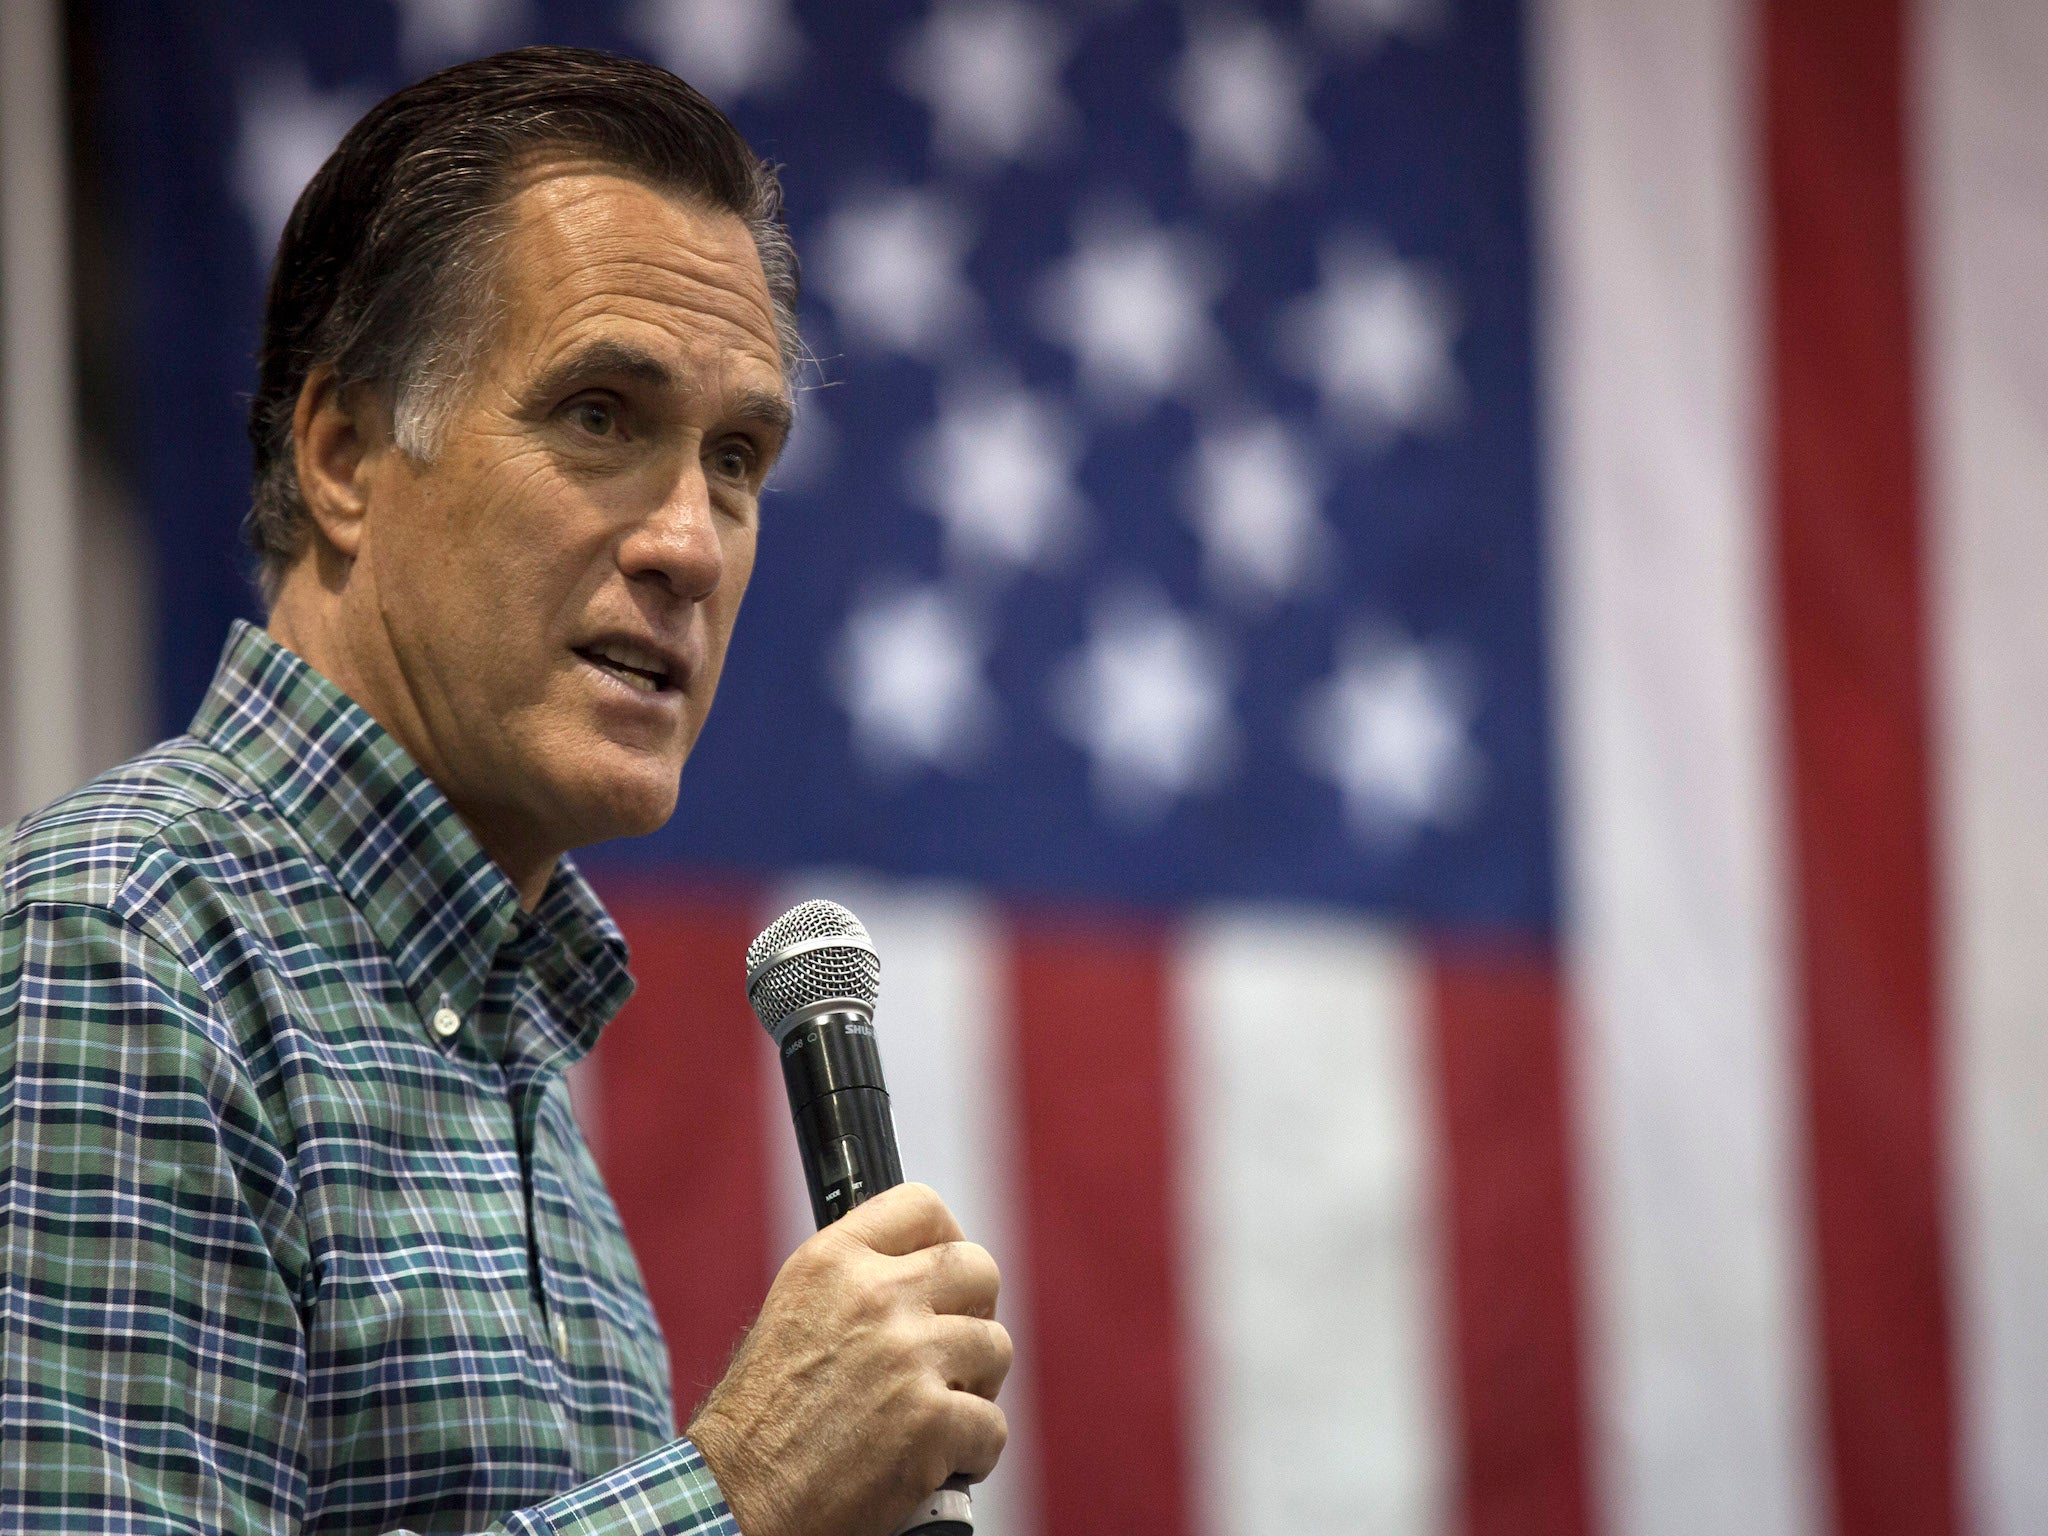 Mitt Romney has been considering a third White House run